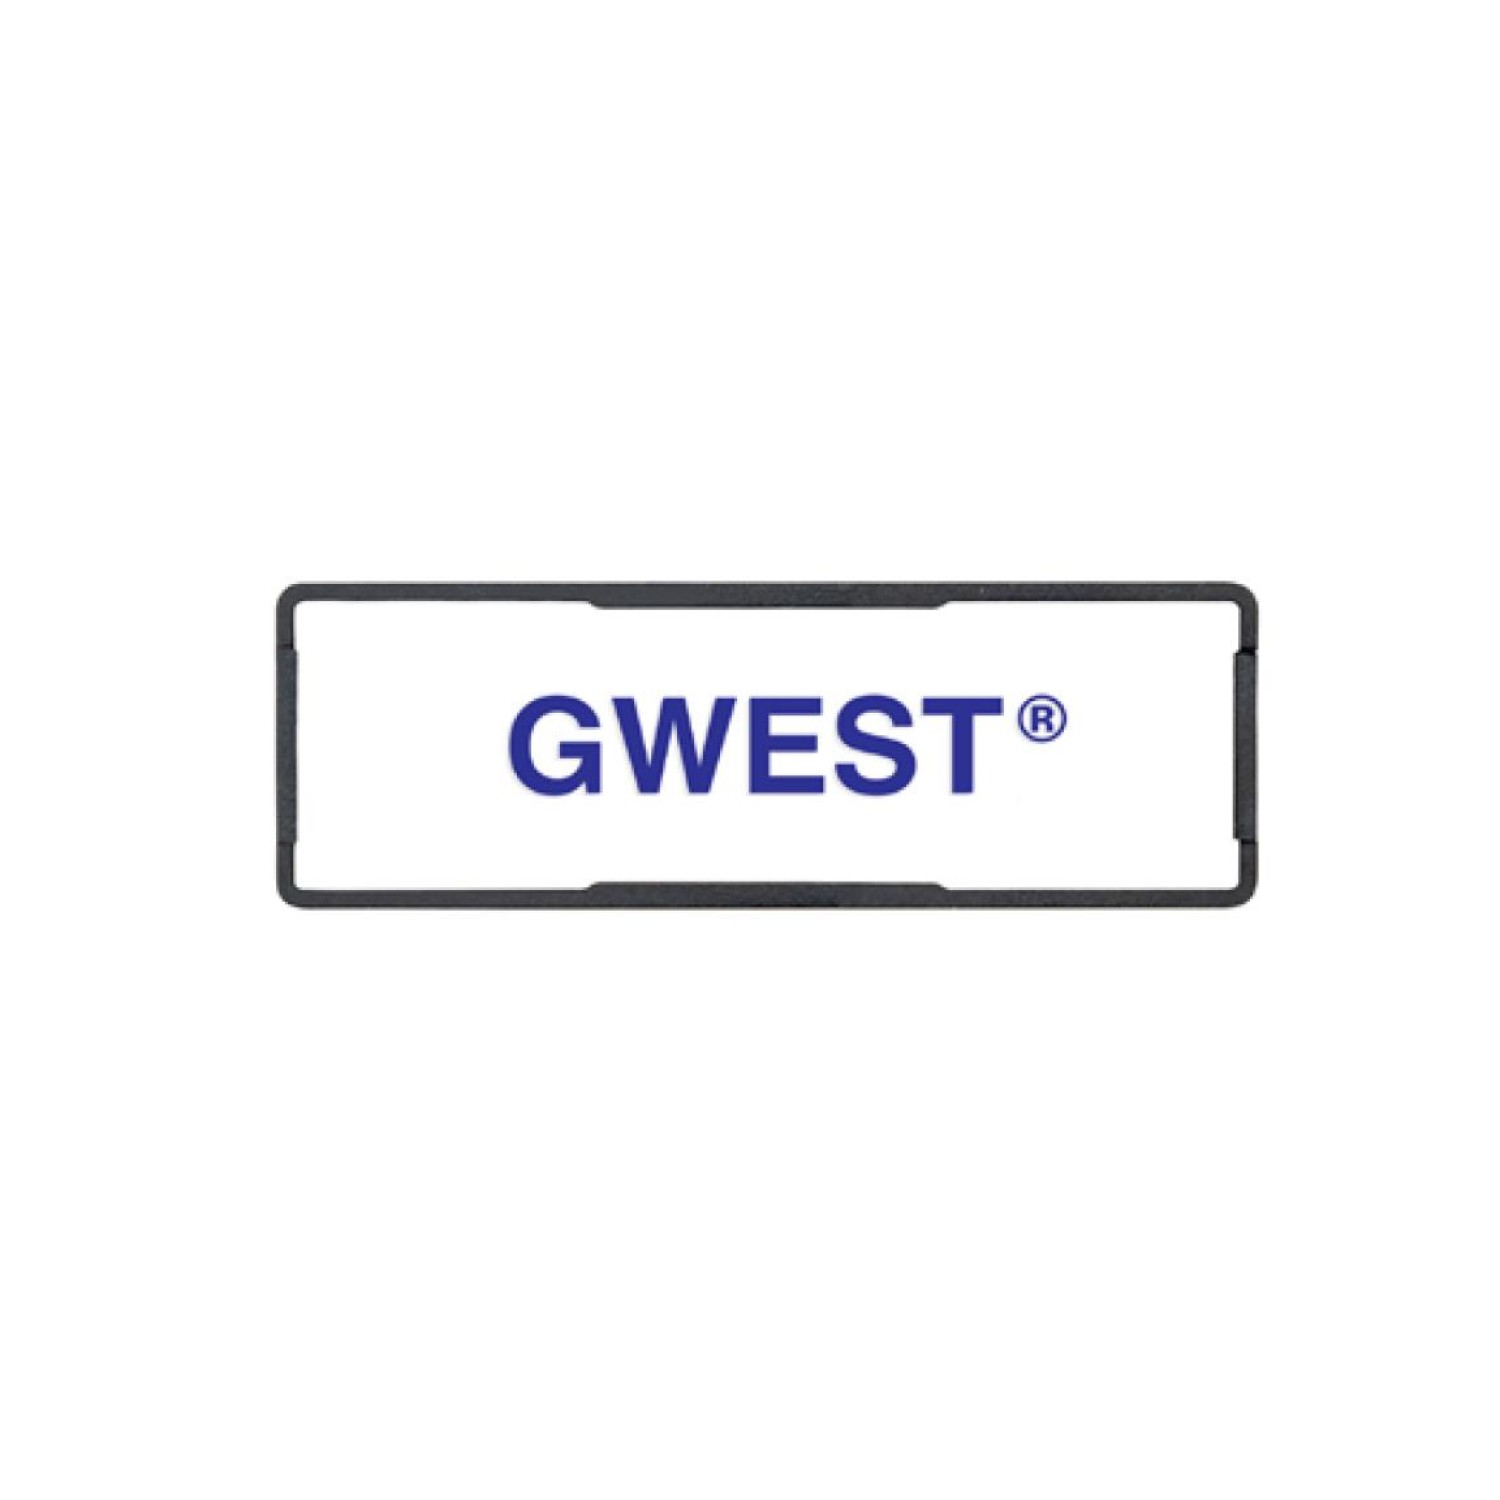 Gwest Pano Etiketi - GPET 1 - 1 Adet